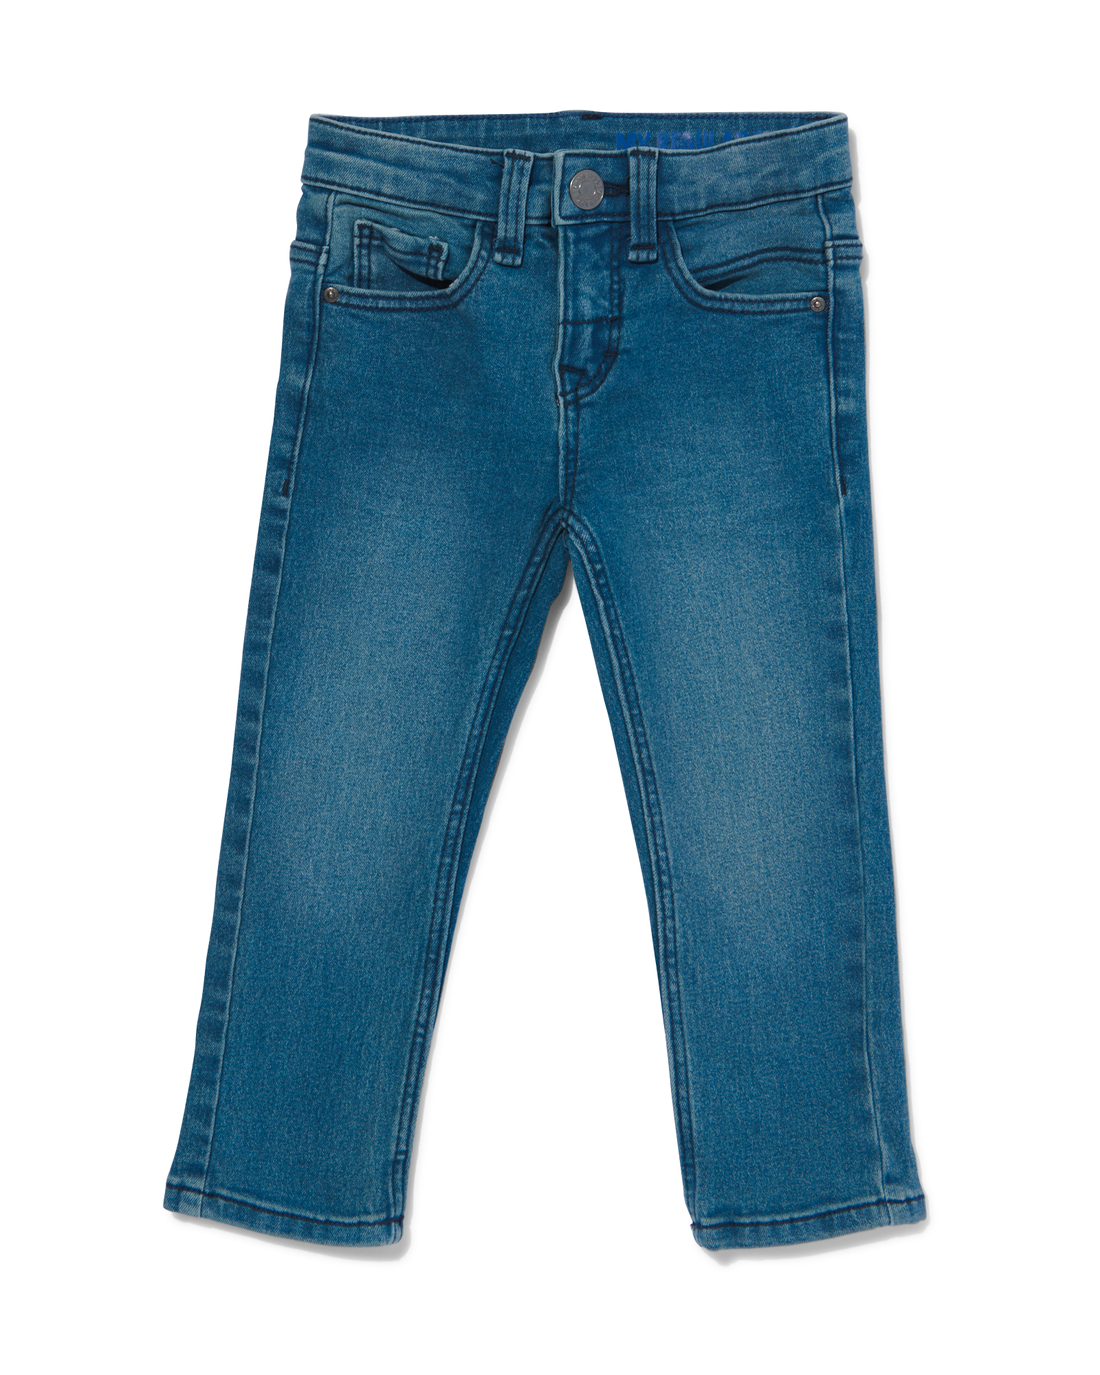 HEMA Kinder Jeans Regular Fit Middenblauw (middenblauw)